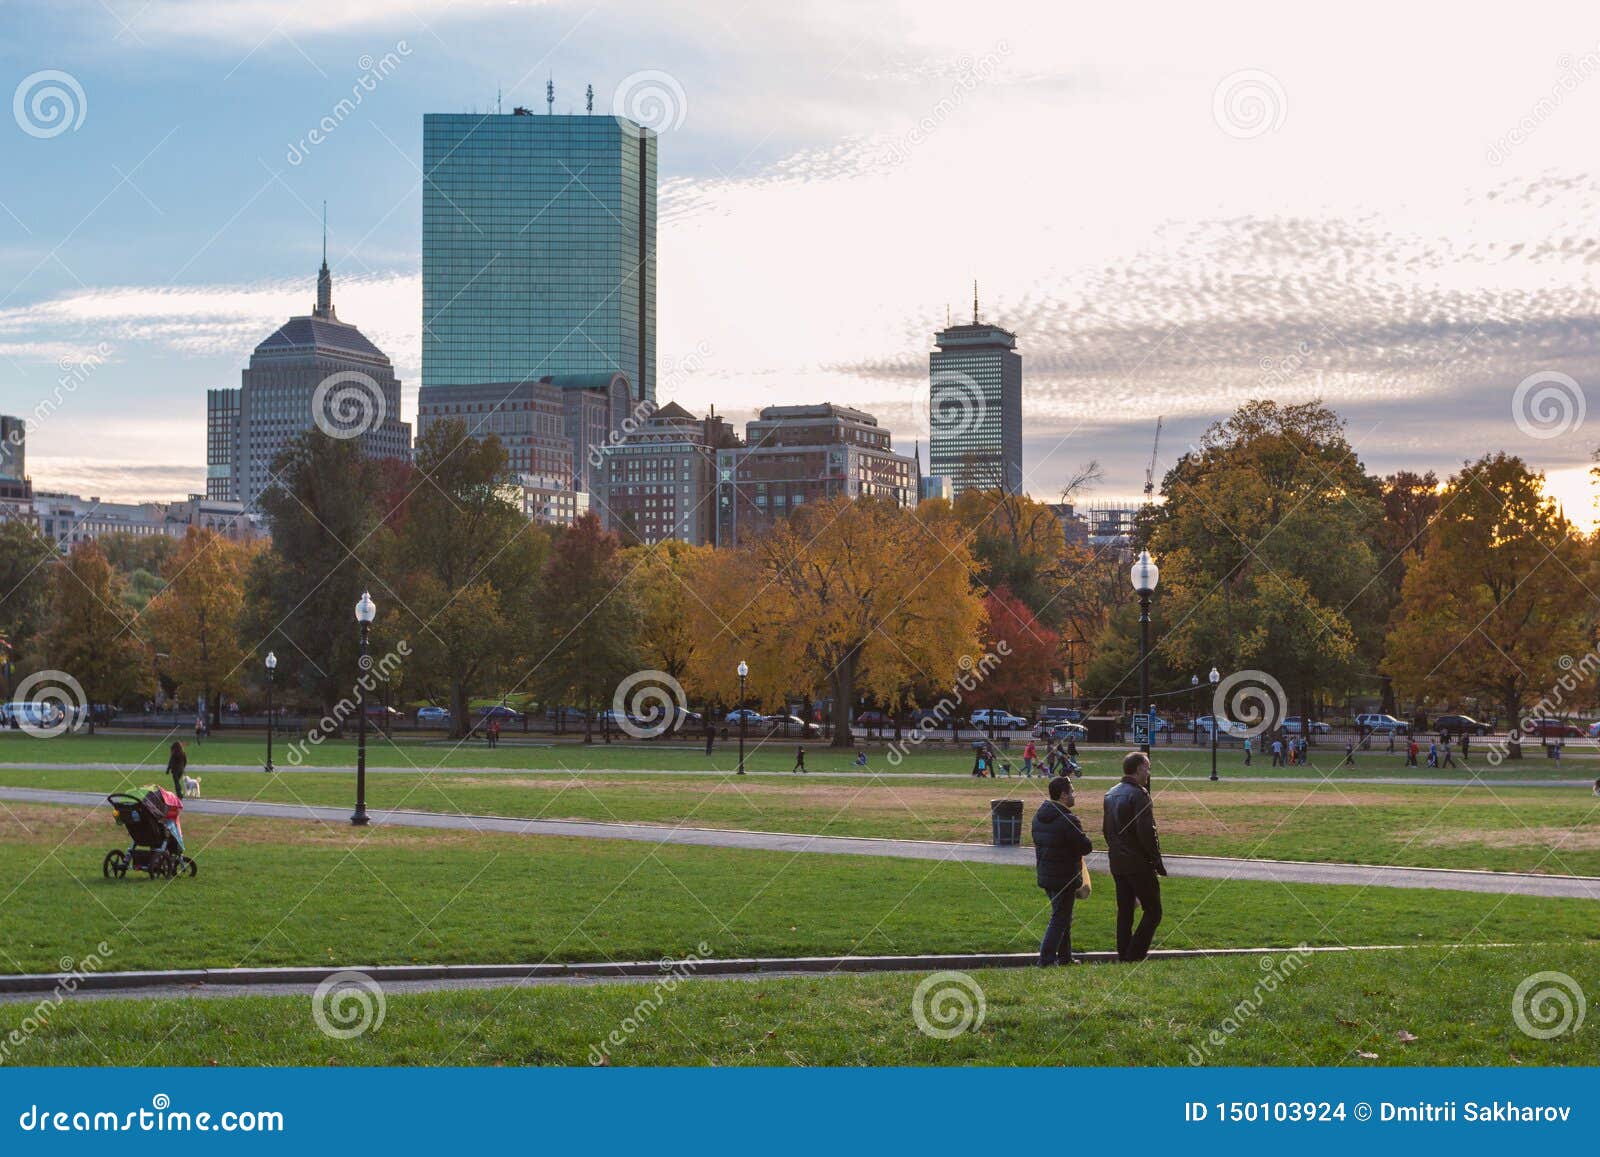 Boston Common Park History